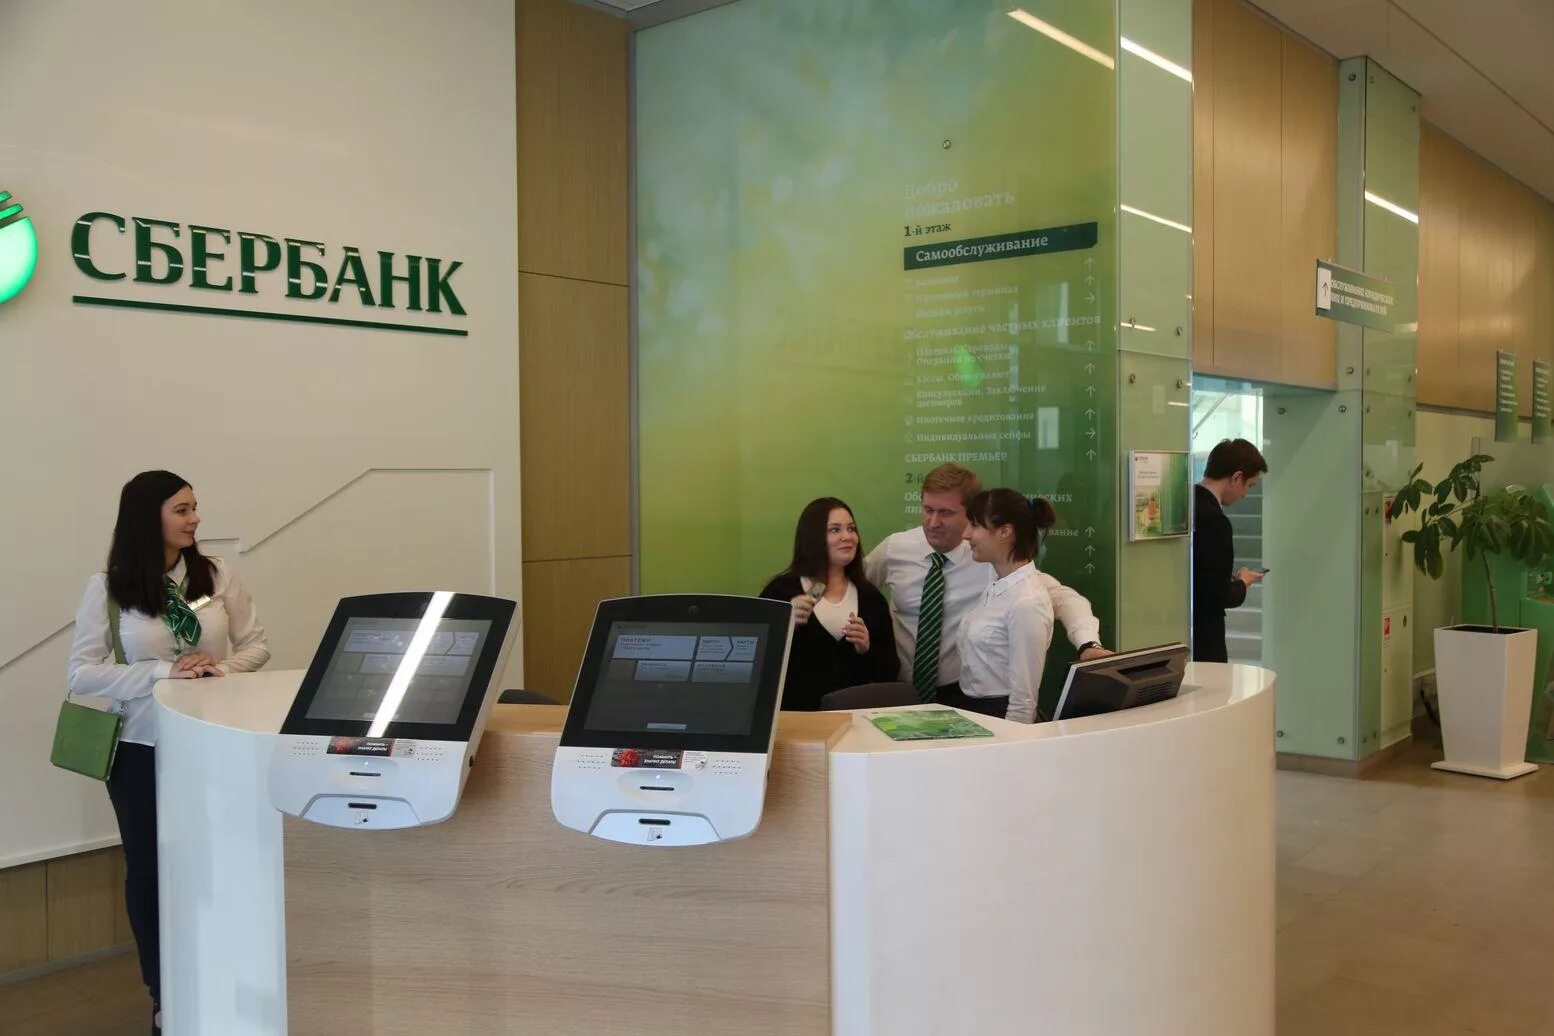 Телефон центрального офиса сбербанка. Сбербанк. Банк Сбербанк. Банк Сбербанк офис. Сбербанк новый банк.